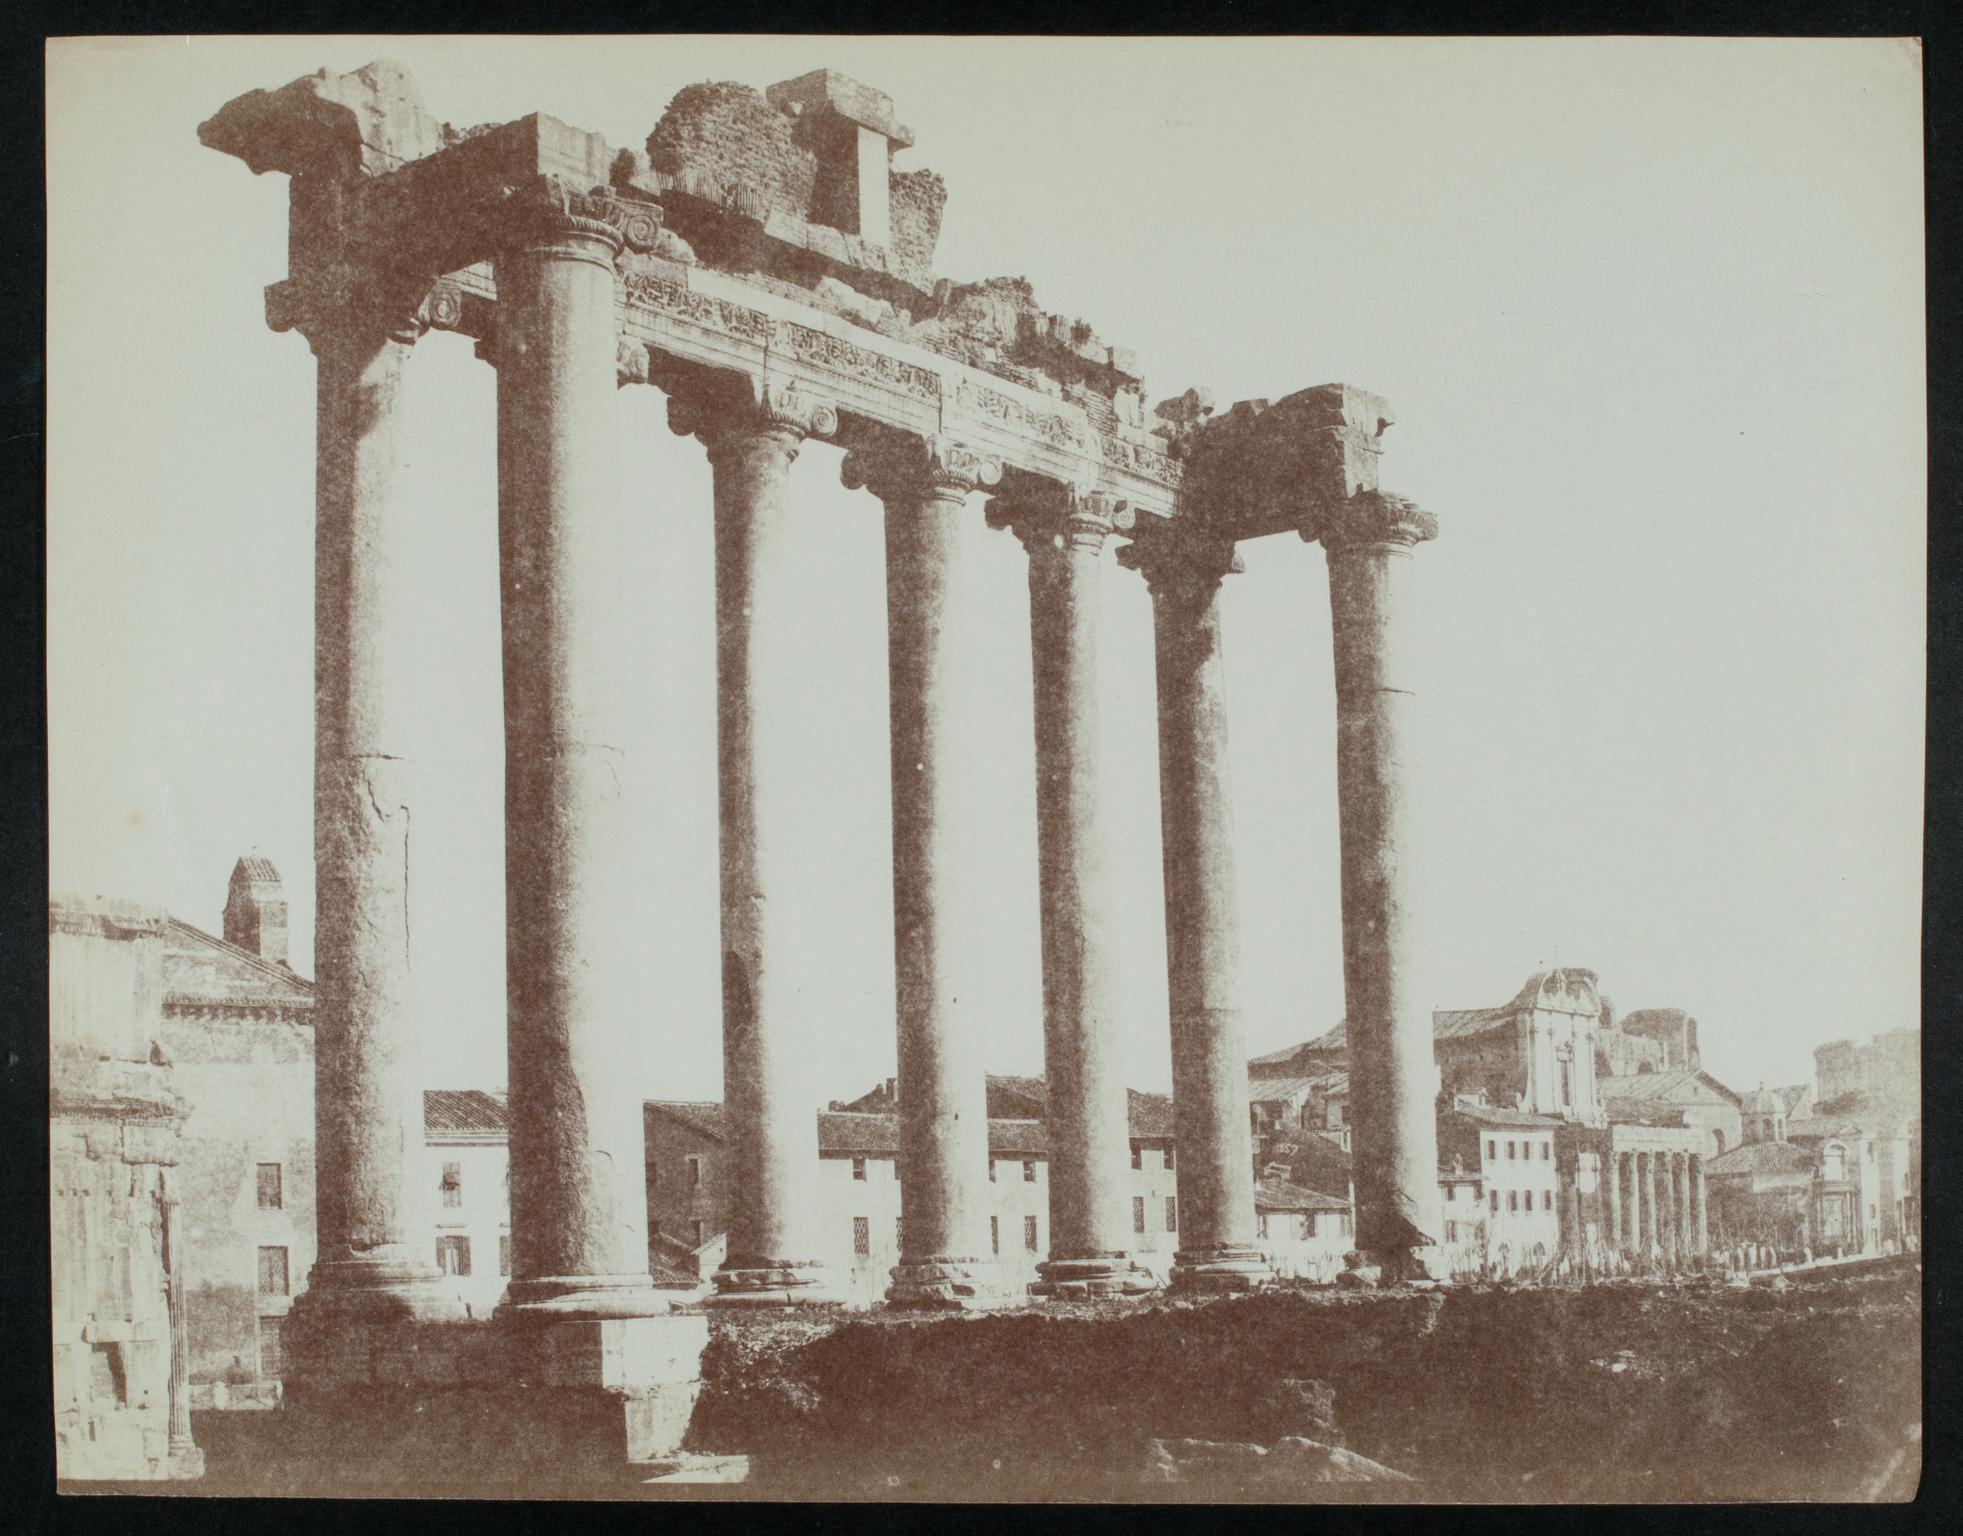 Forum at Rome, photograph